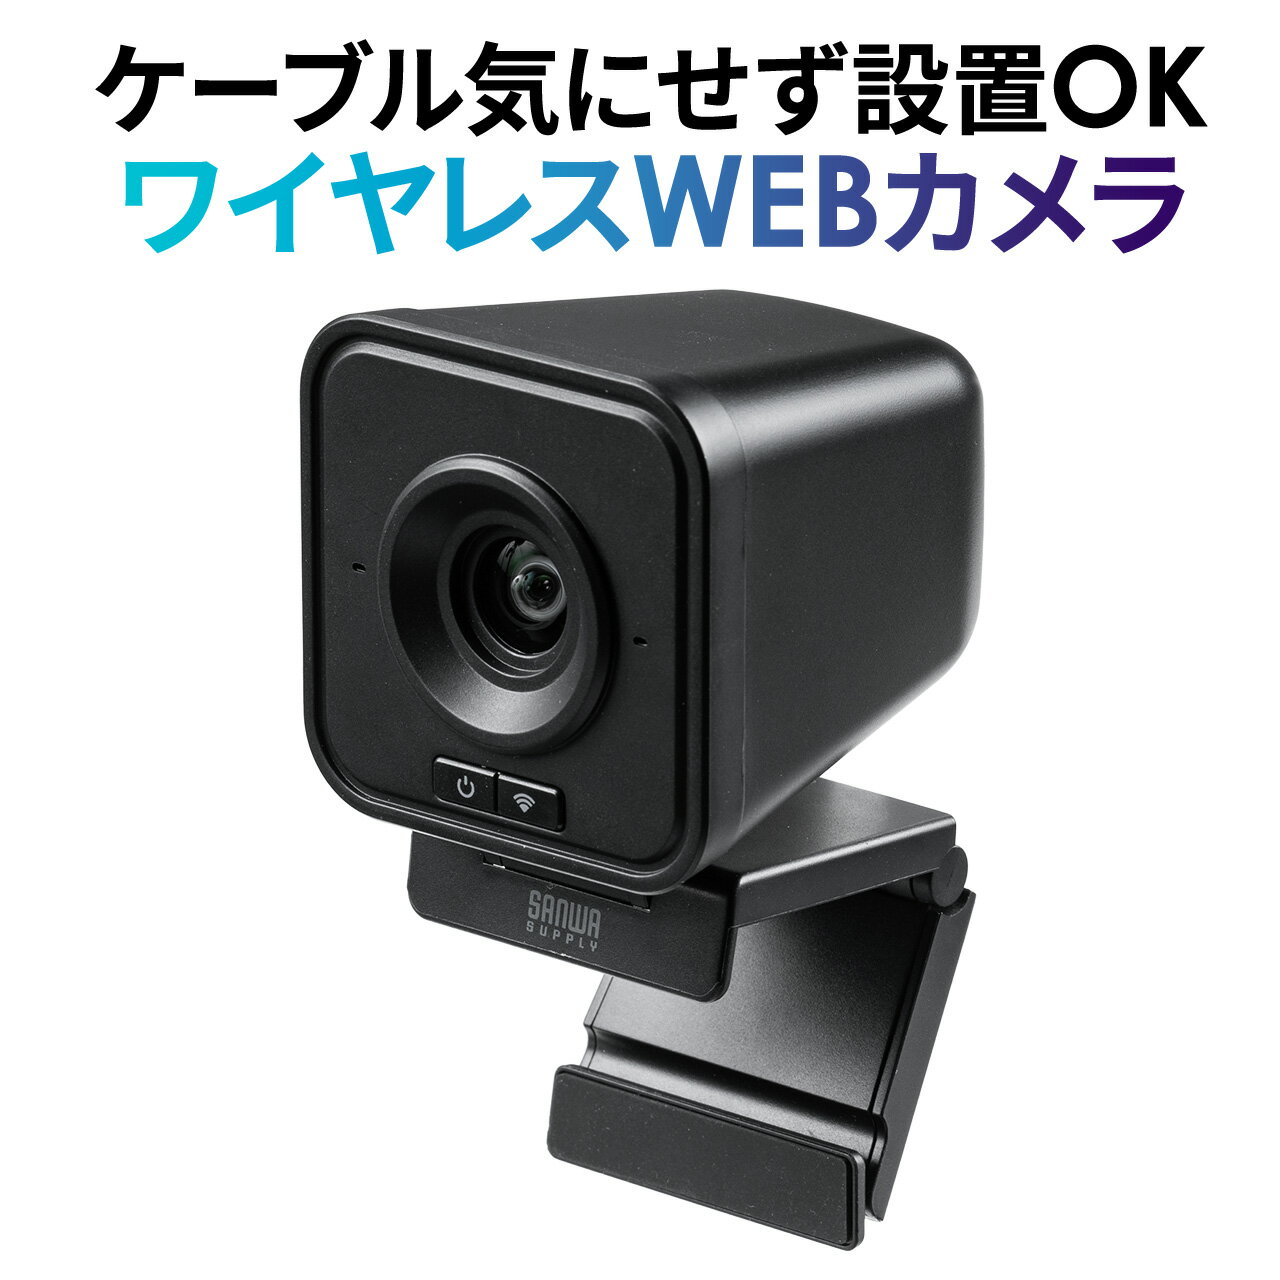 WEBカメラ ワイヤレス 無線 USB 200万画素 Type-C 変換アダプタ付き 広角レンズ 2.4GHz mac ドライバー不要 Zoom Mic…